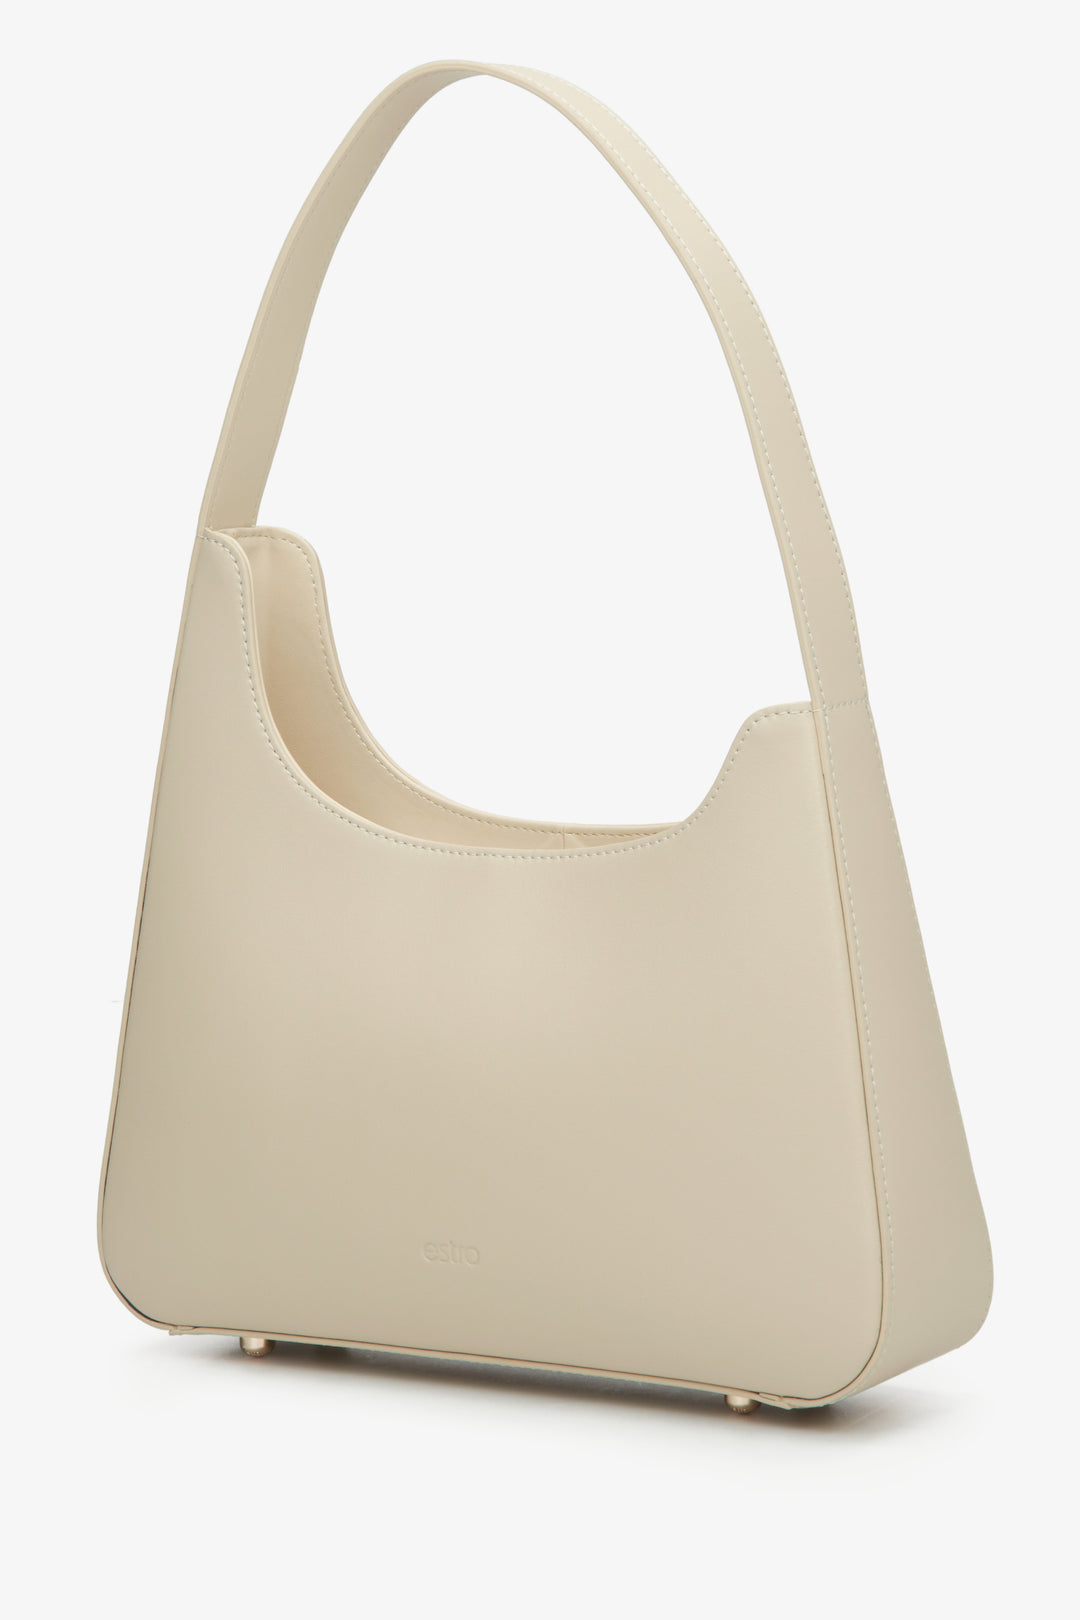 Women's light beige leather handbag Estro.